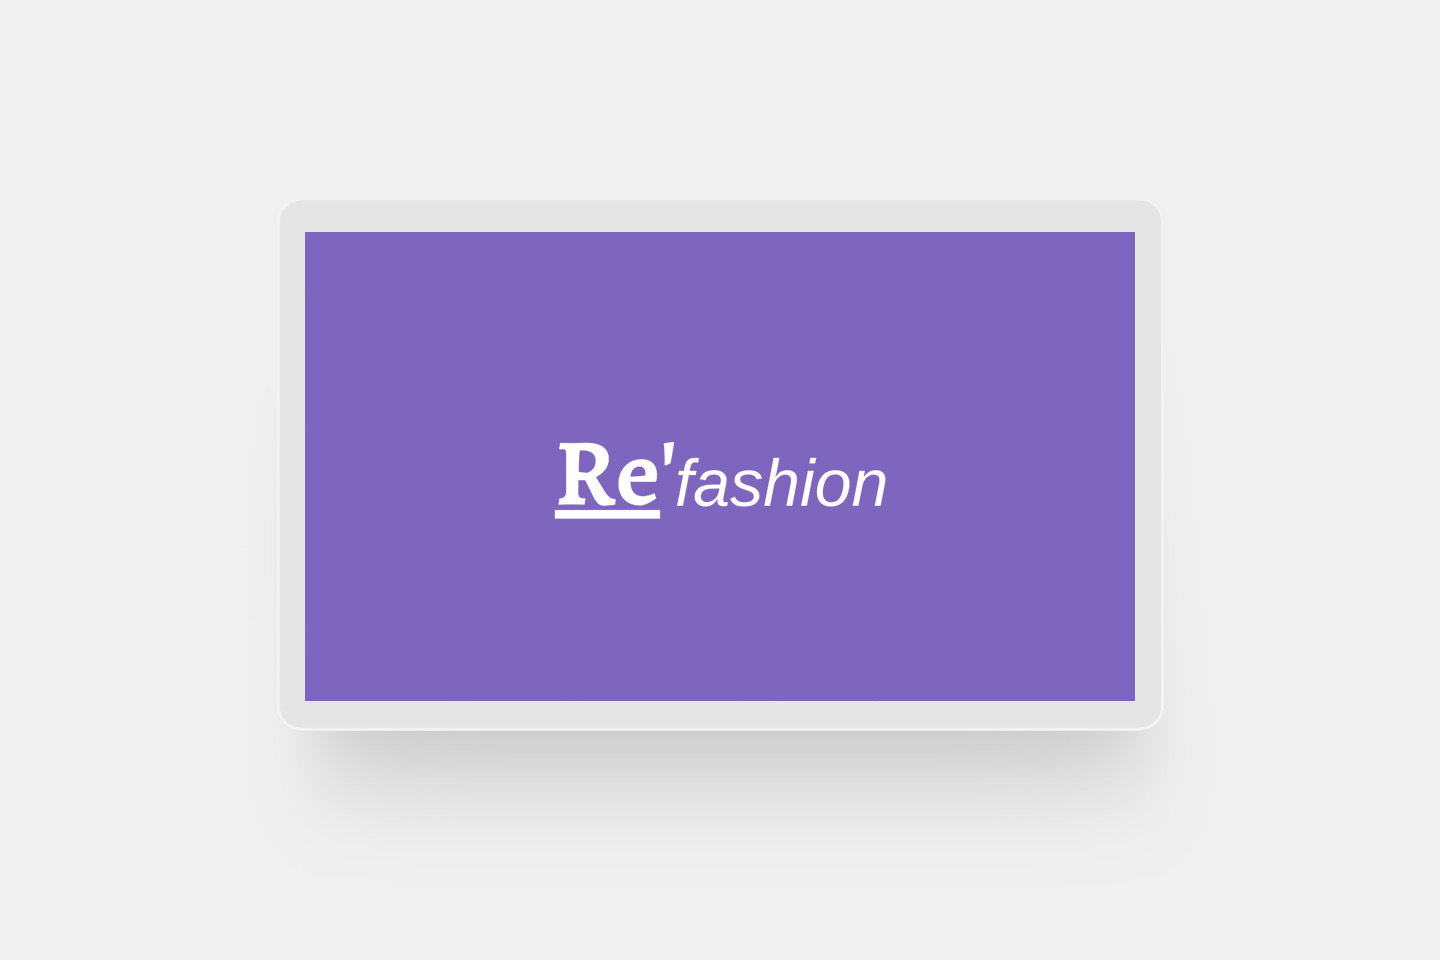 Re’fashion